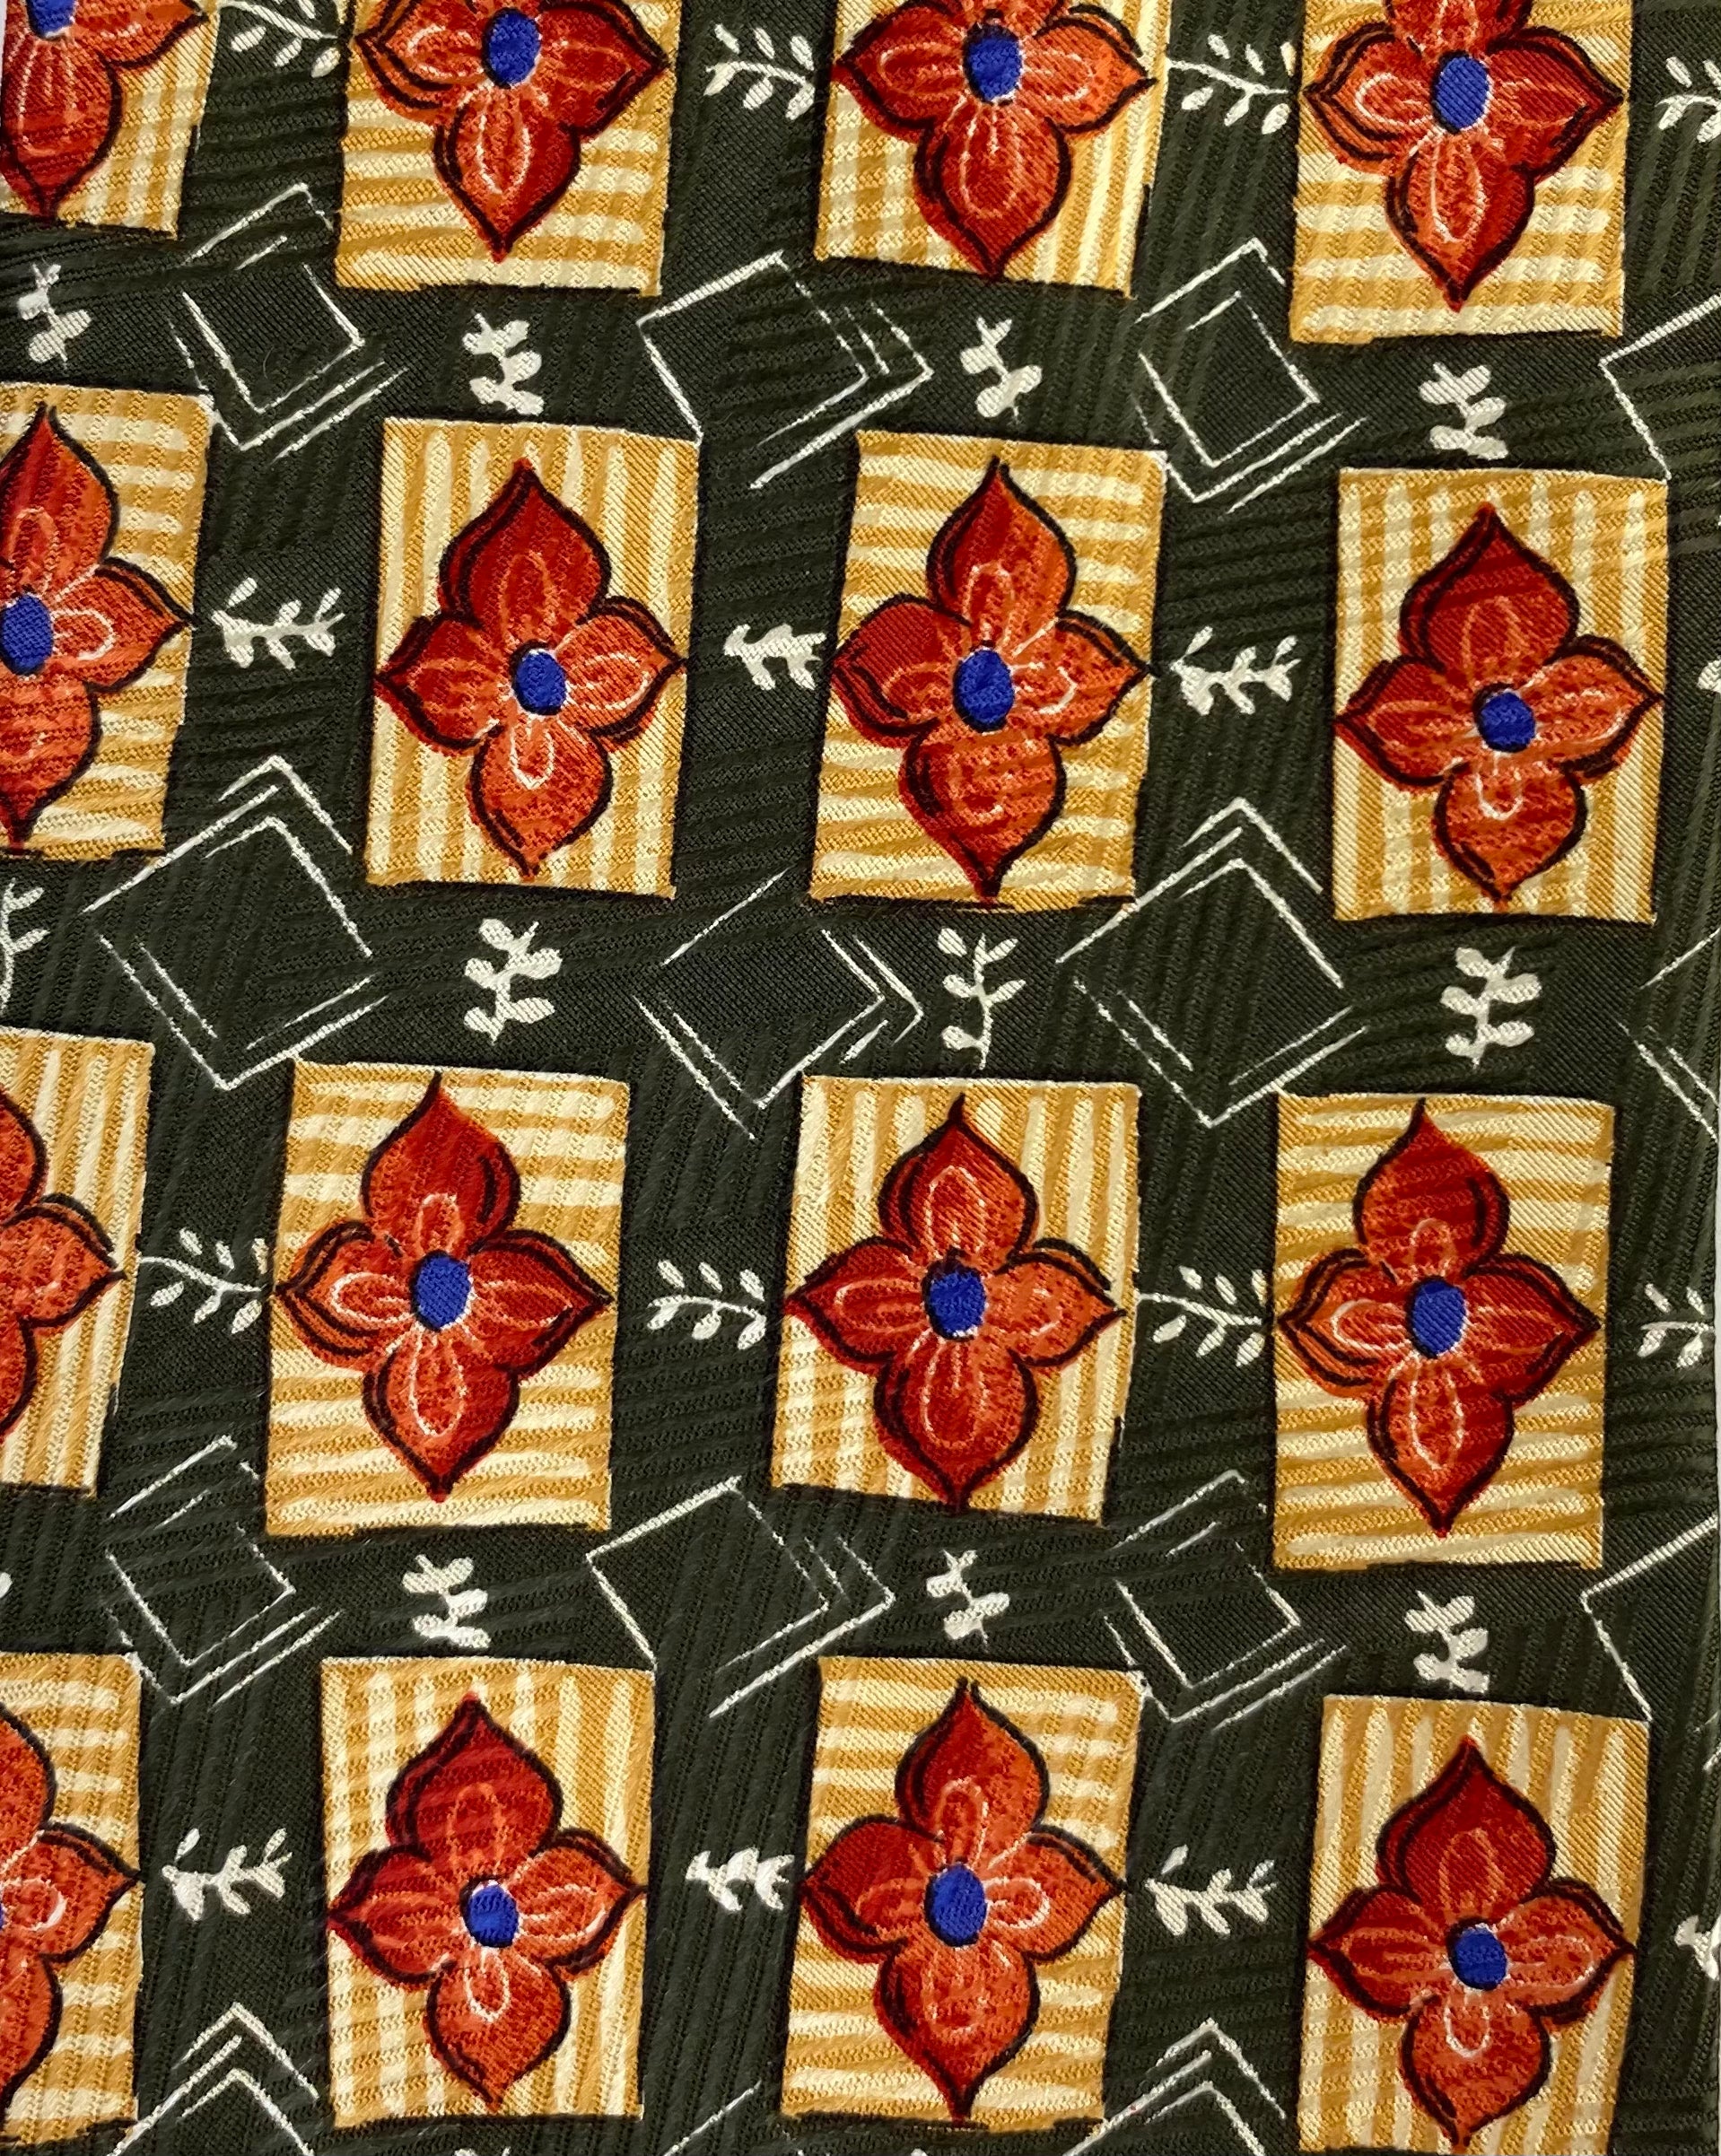 90s Deadstock Silk Necktie, Men's Vintage Green/ Gold/ Red Geometric Floral Pattern Tie, NOS